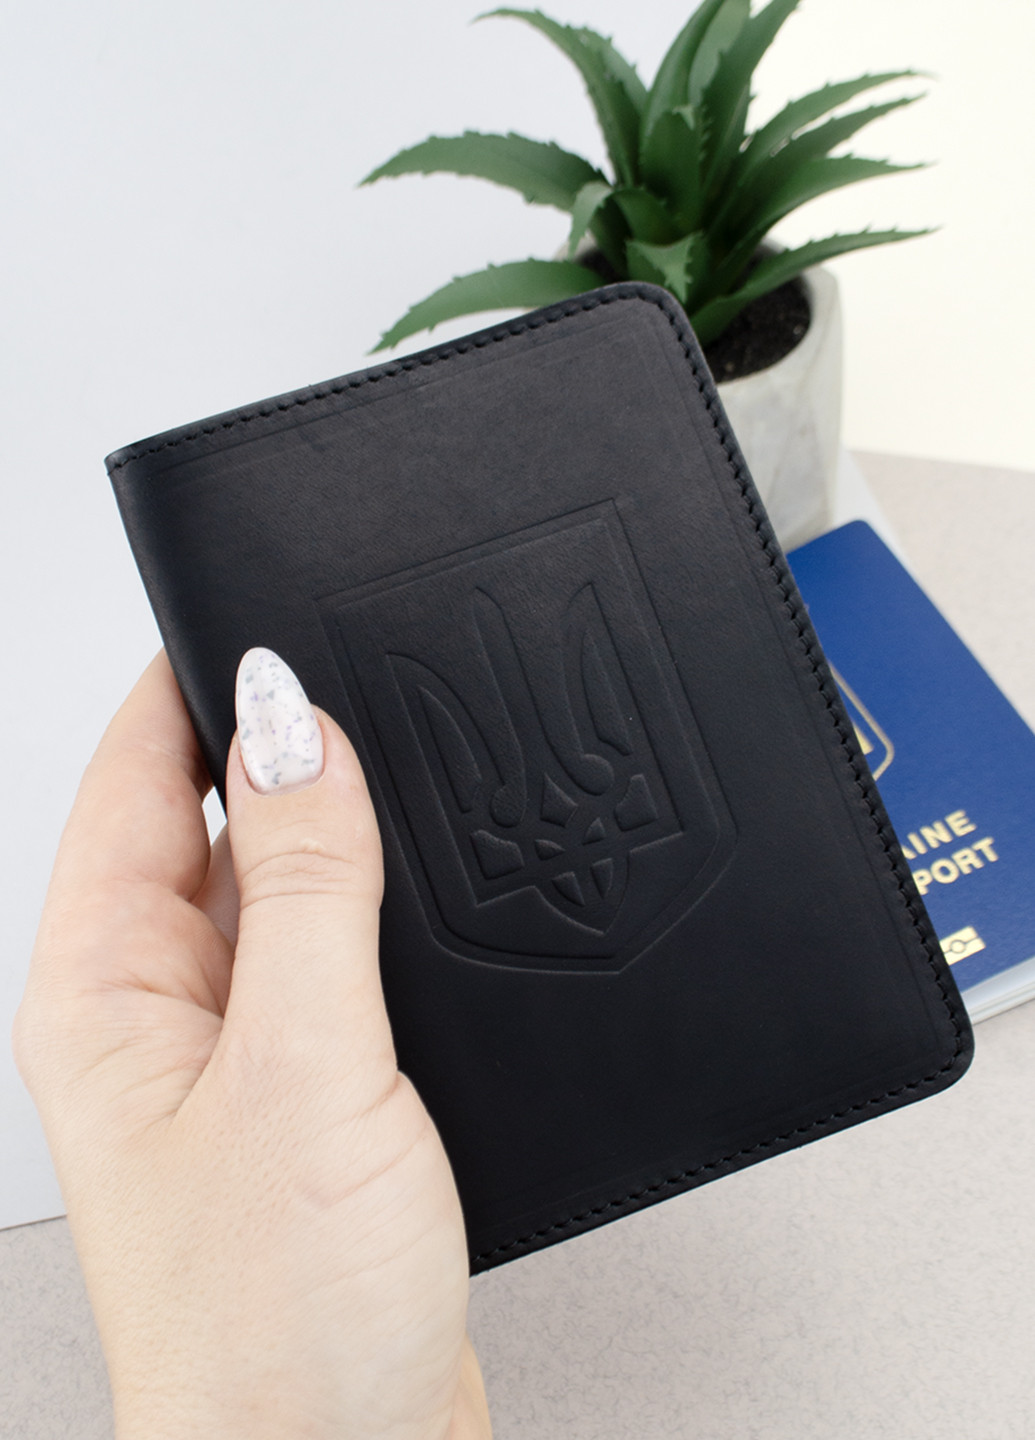 Обкладинка на паспорт шкіряна HC-0074-1 з гербом України чорна матова HandyCover (263686830)